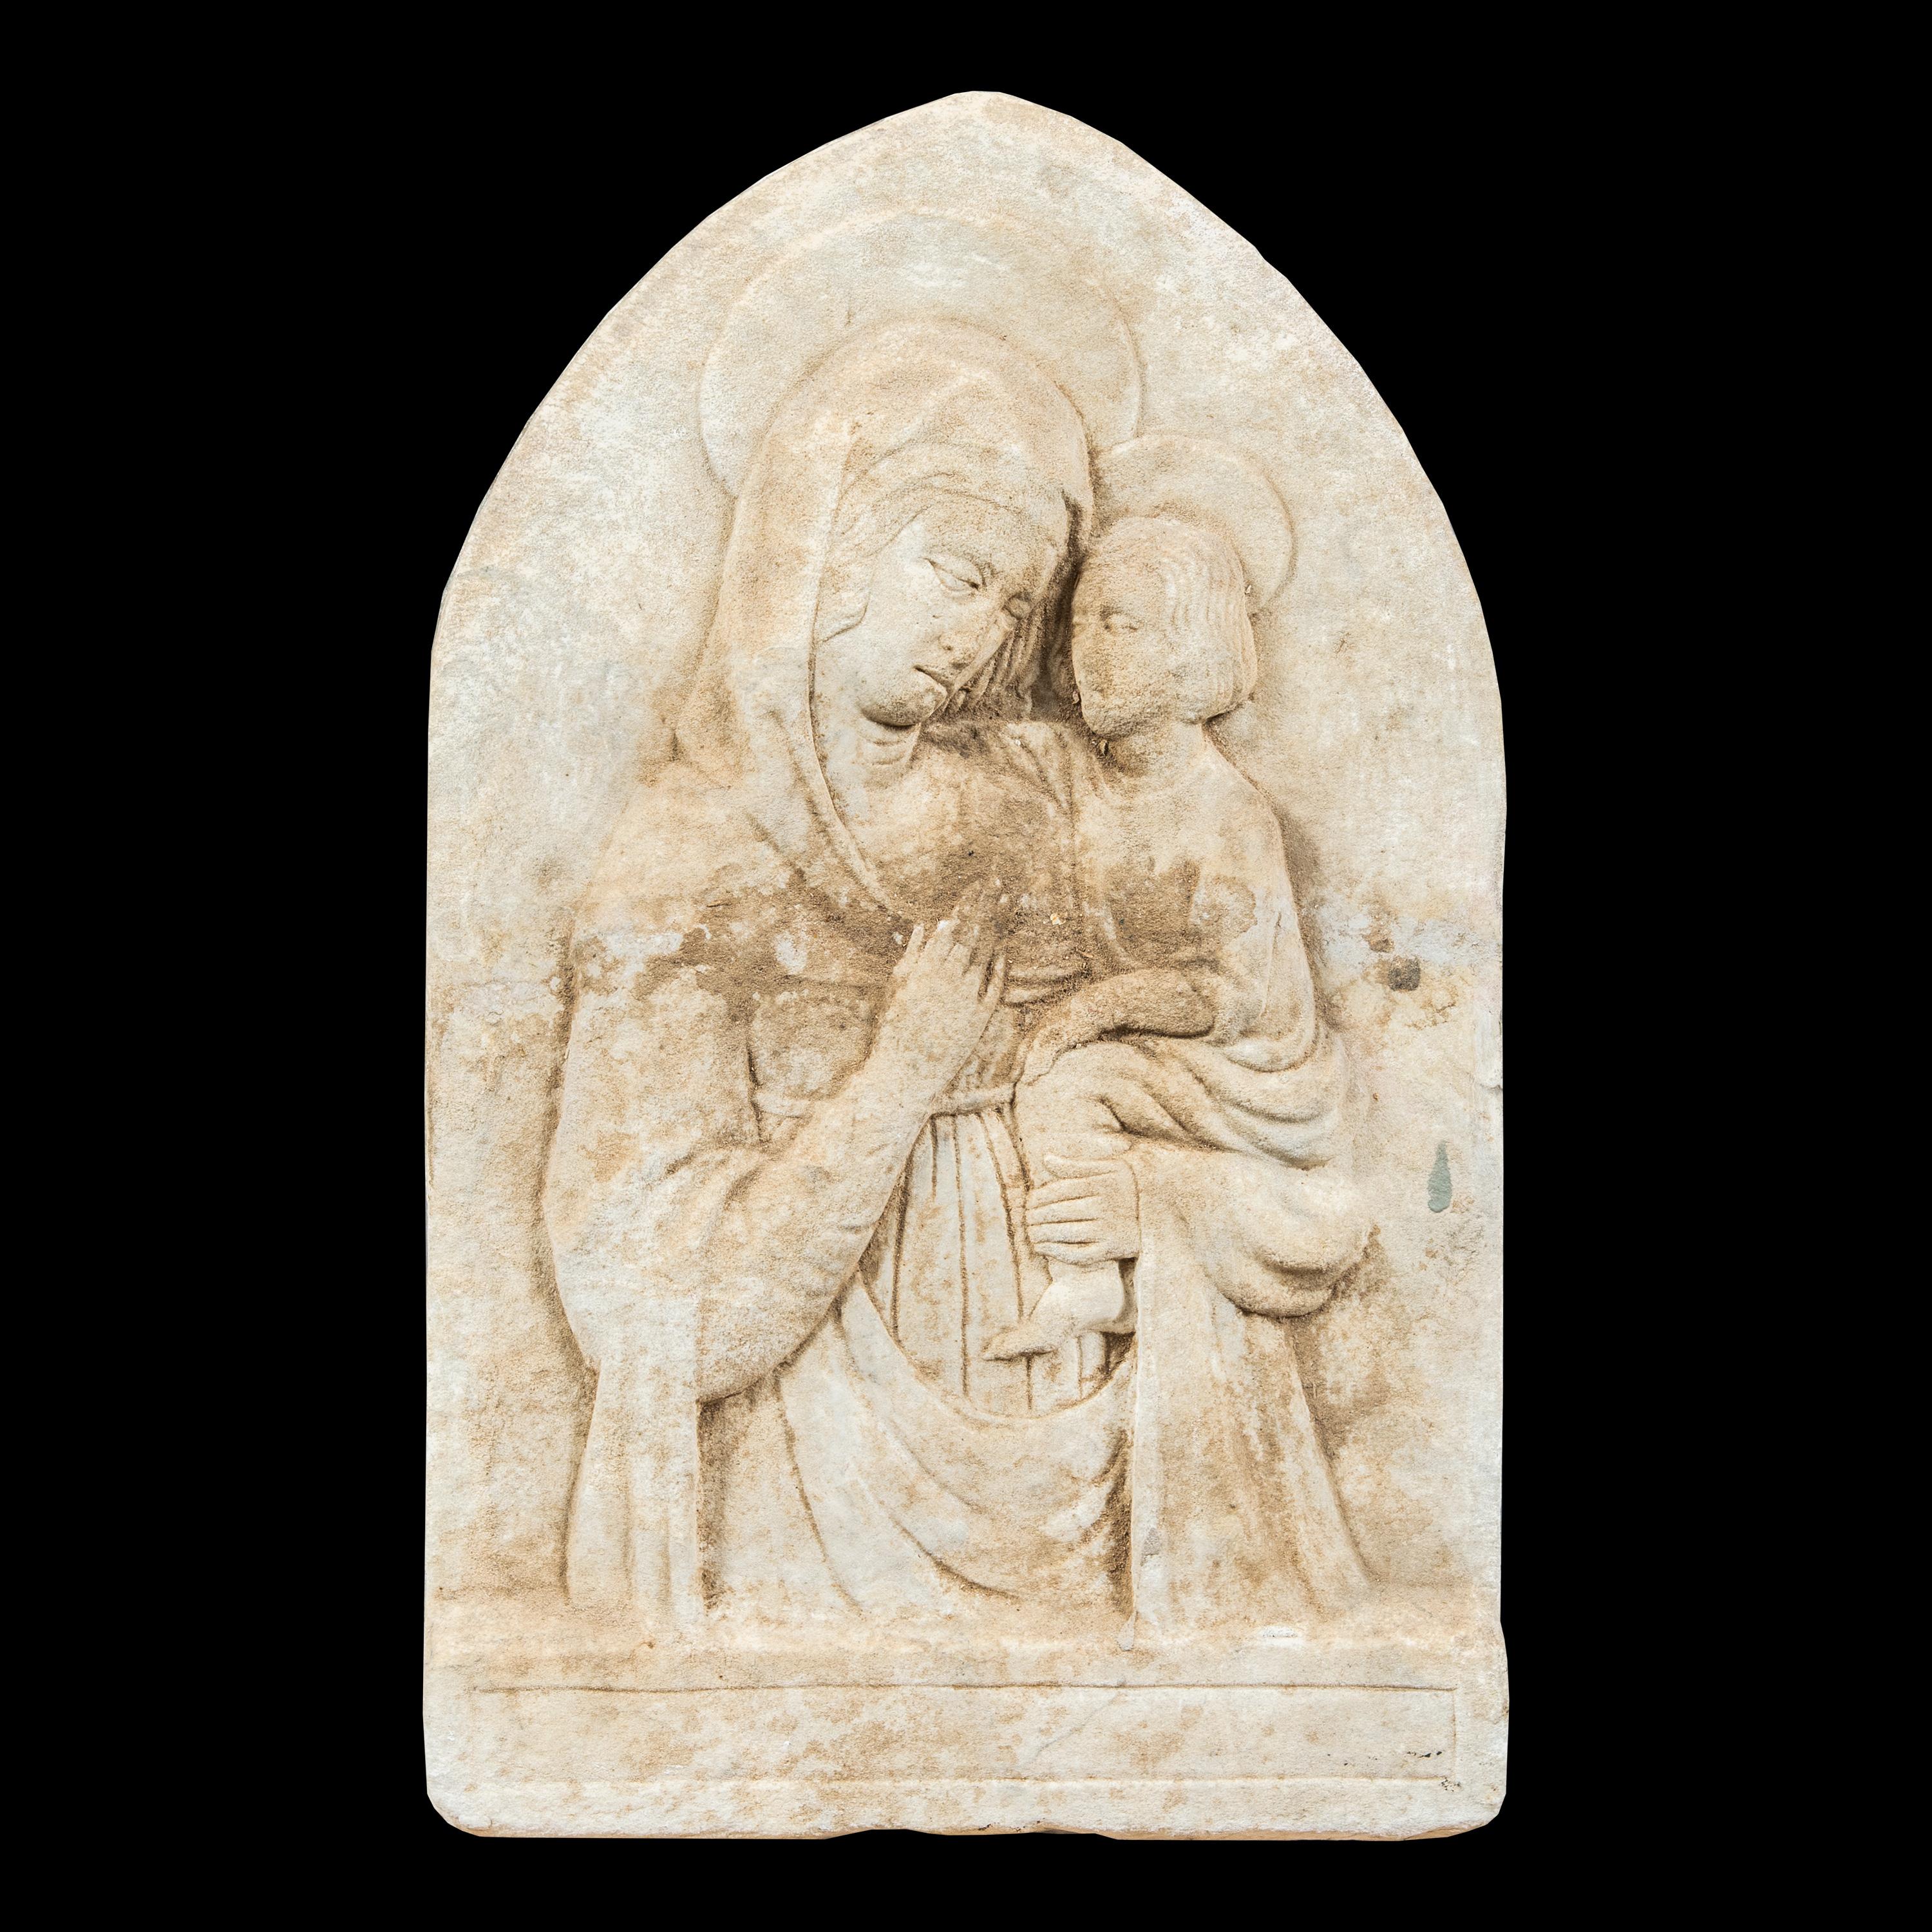 Ancient Italian sculptor - 16th century stone sculpture - Madonna Child figure